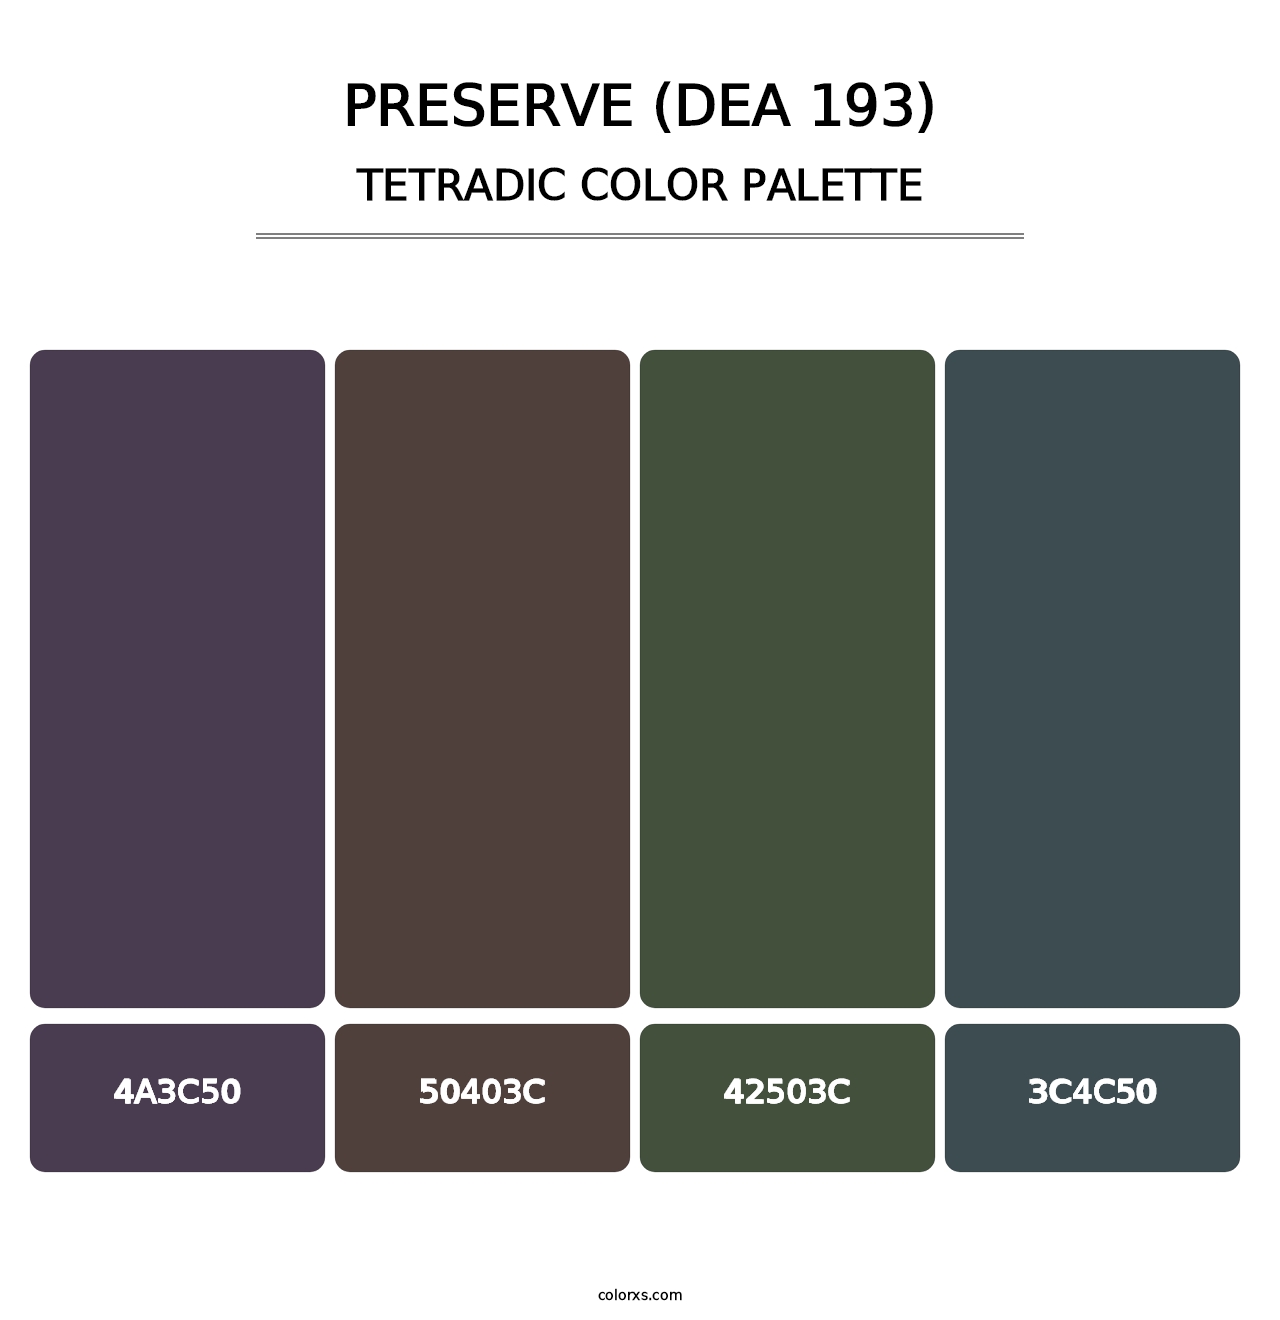 Preserve (DEA 193) - Tetradic Color Palette